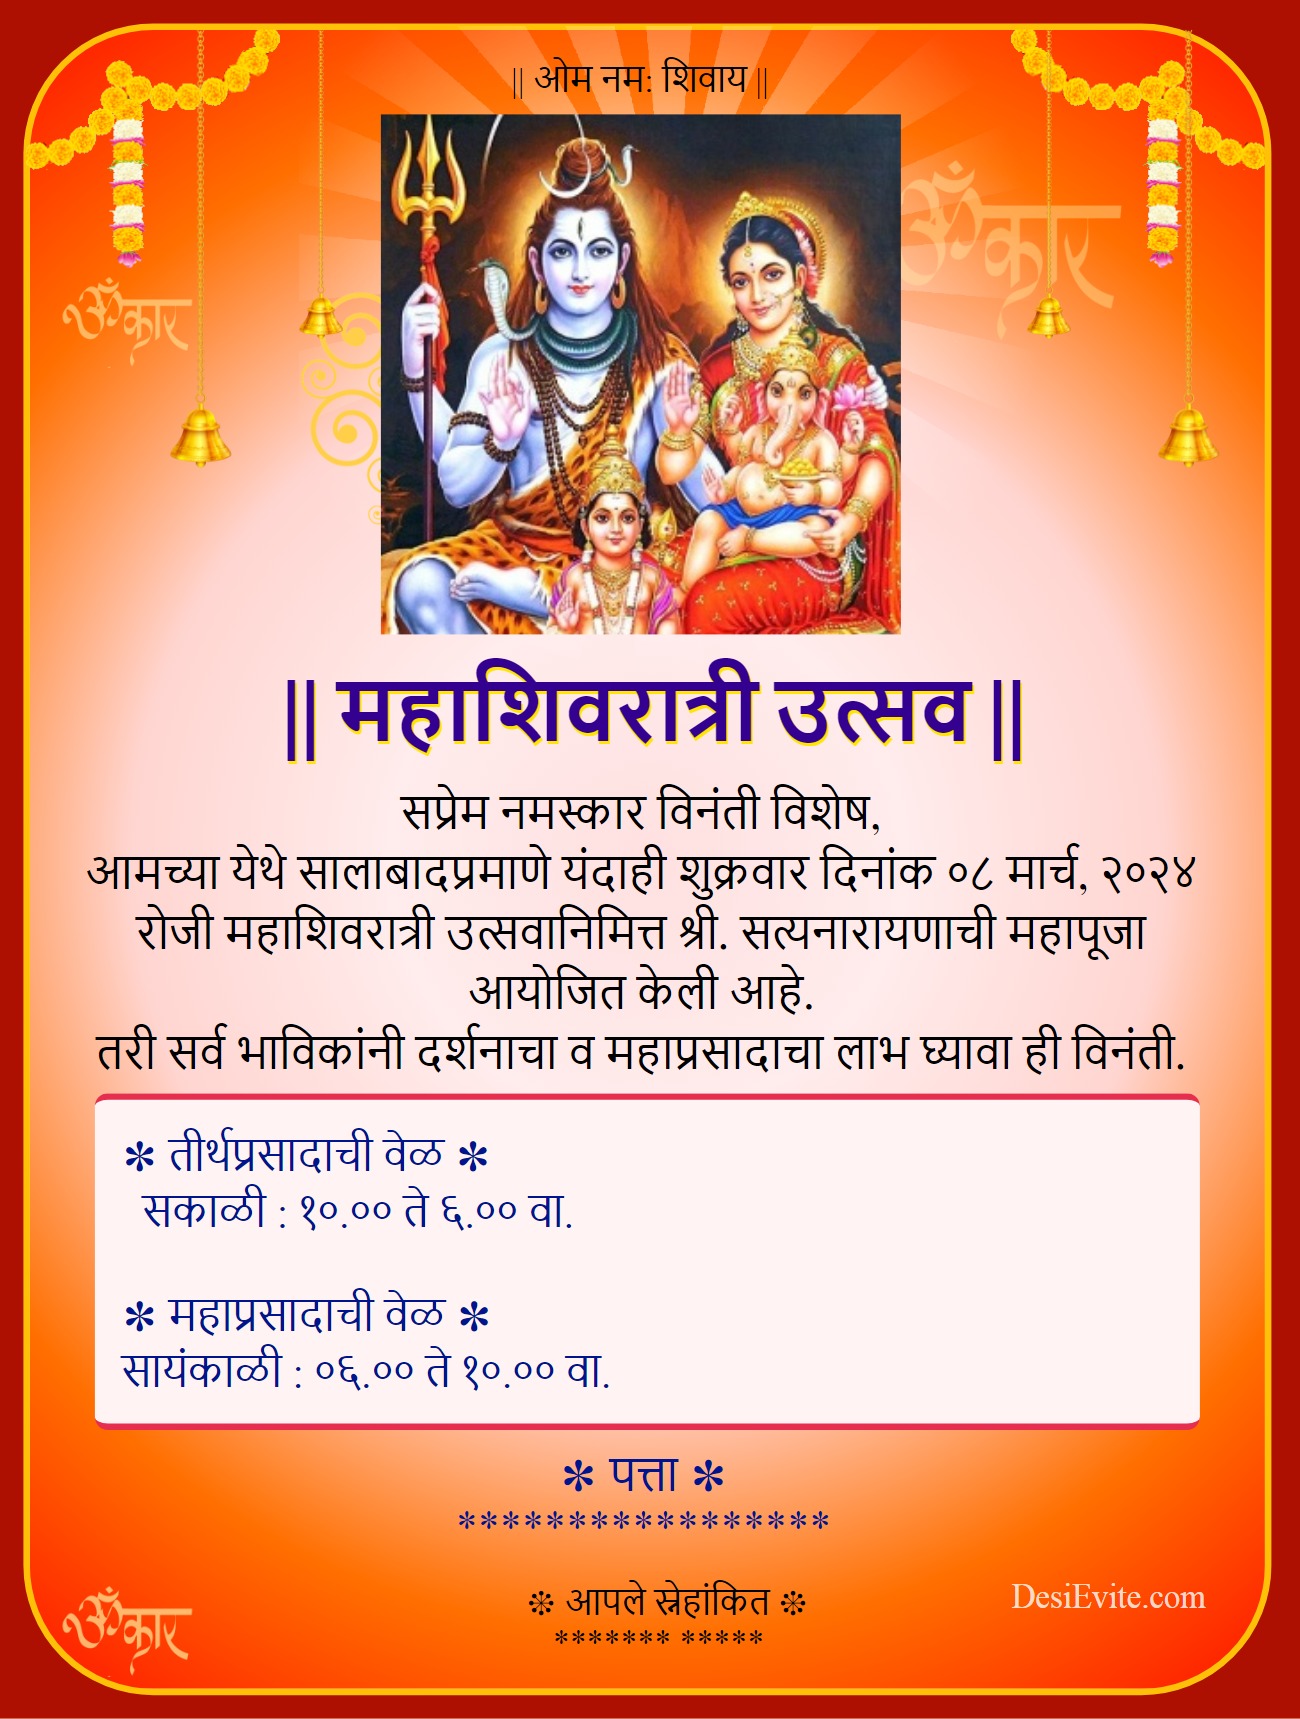 Mahashivratri invitation ecard 144 